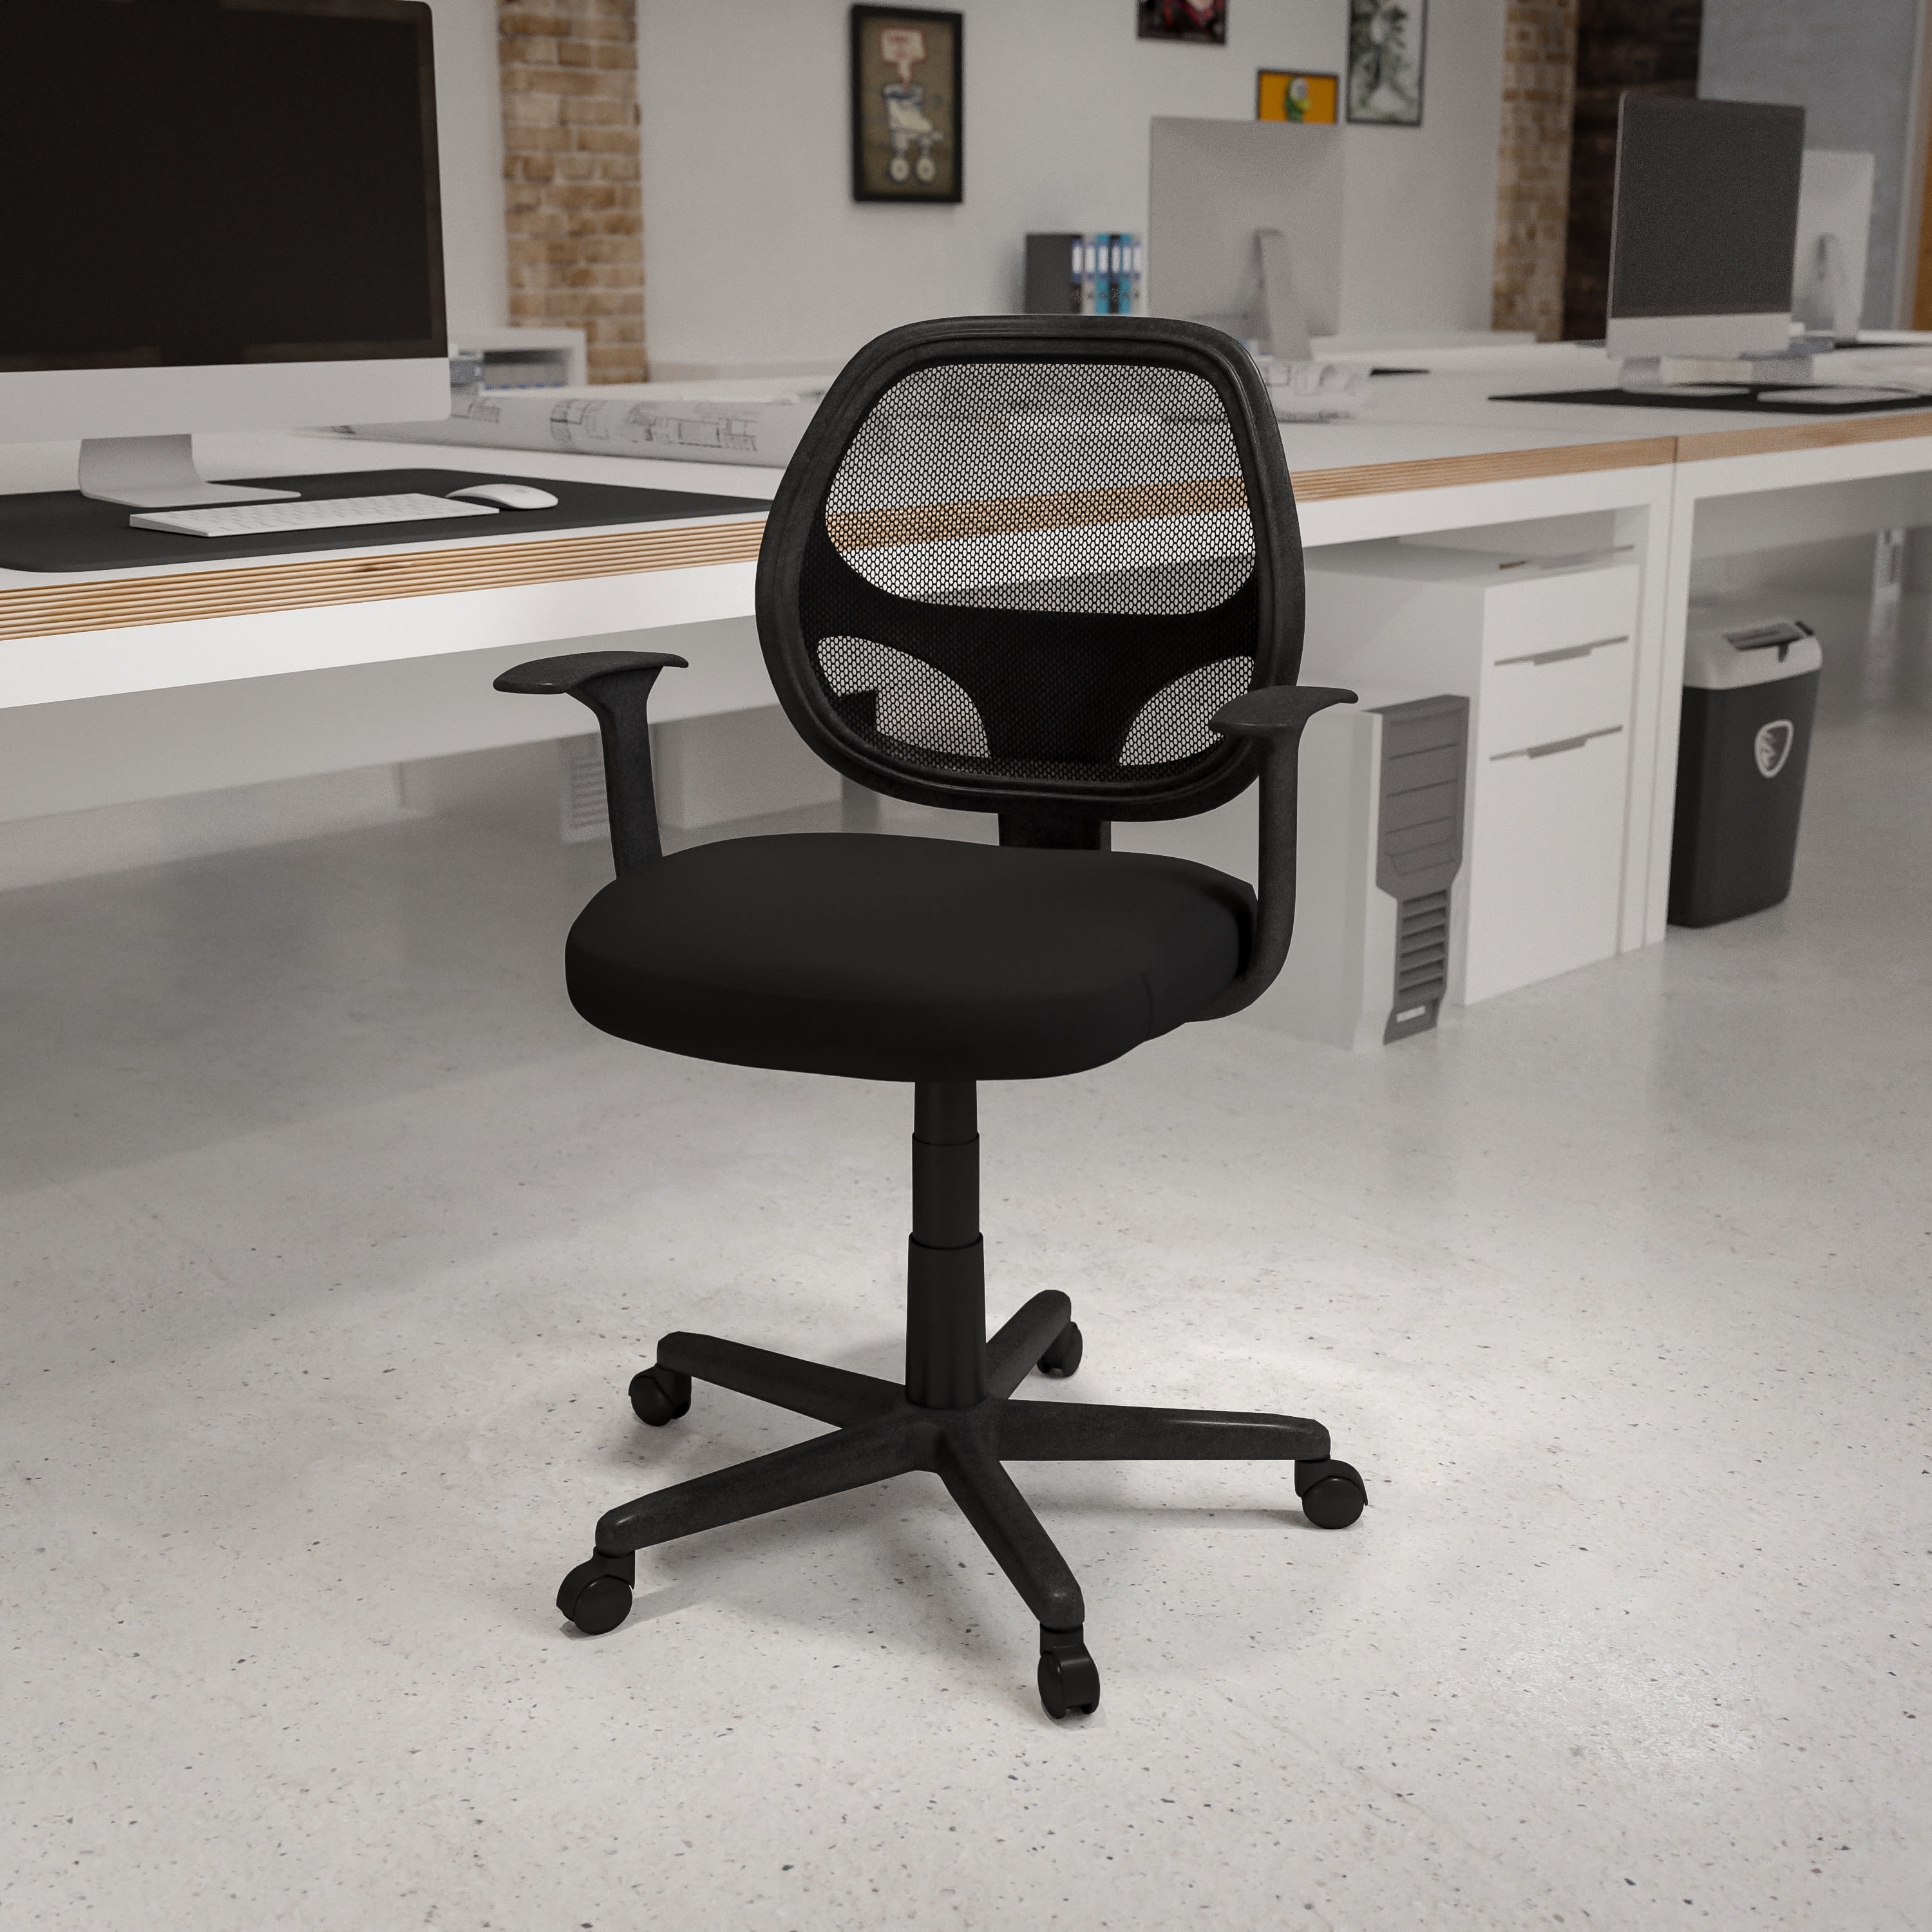 Ergonomic Executive Swivel Mesh Office Computer Desk Task Chair Midback w/ Arms 